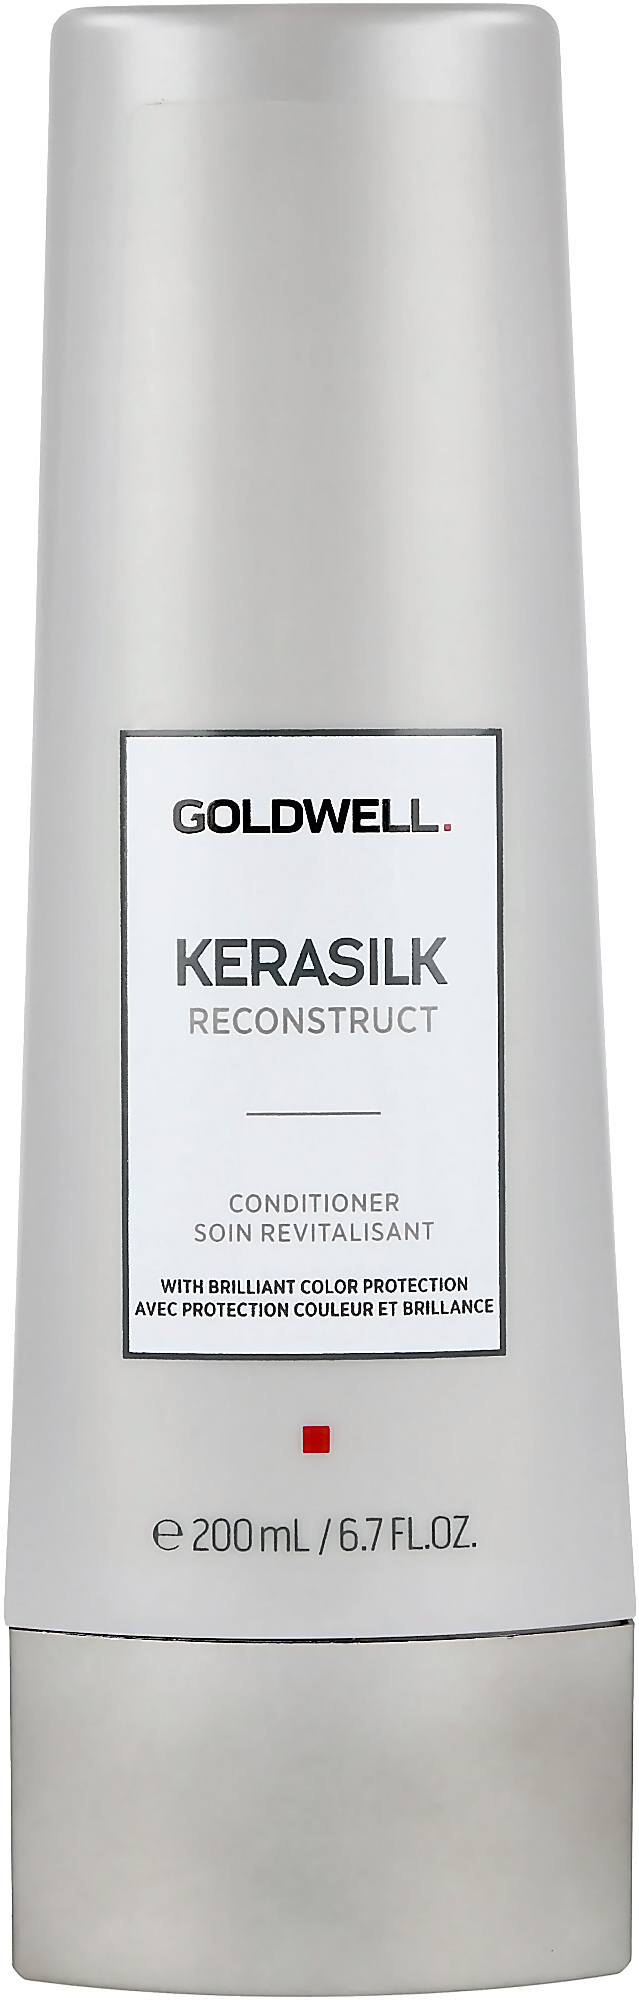 Goldwell Kerasilk Reconstruct Conditioner 200ml